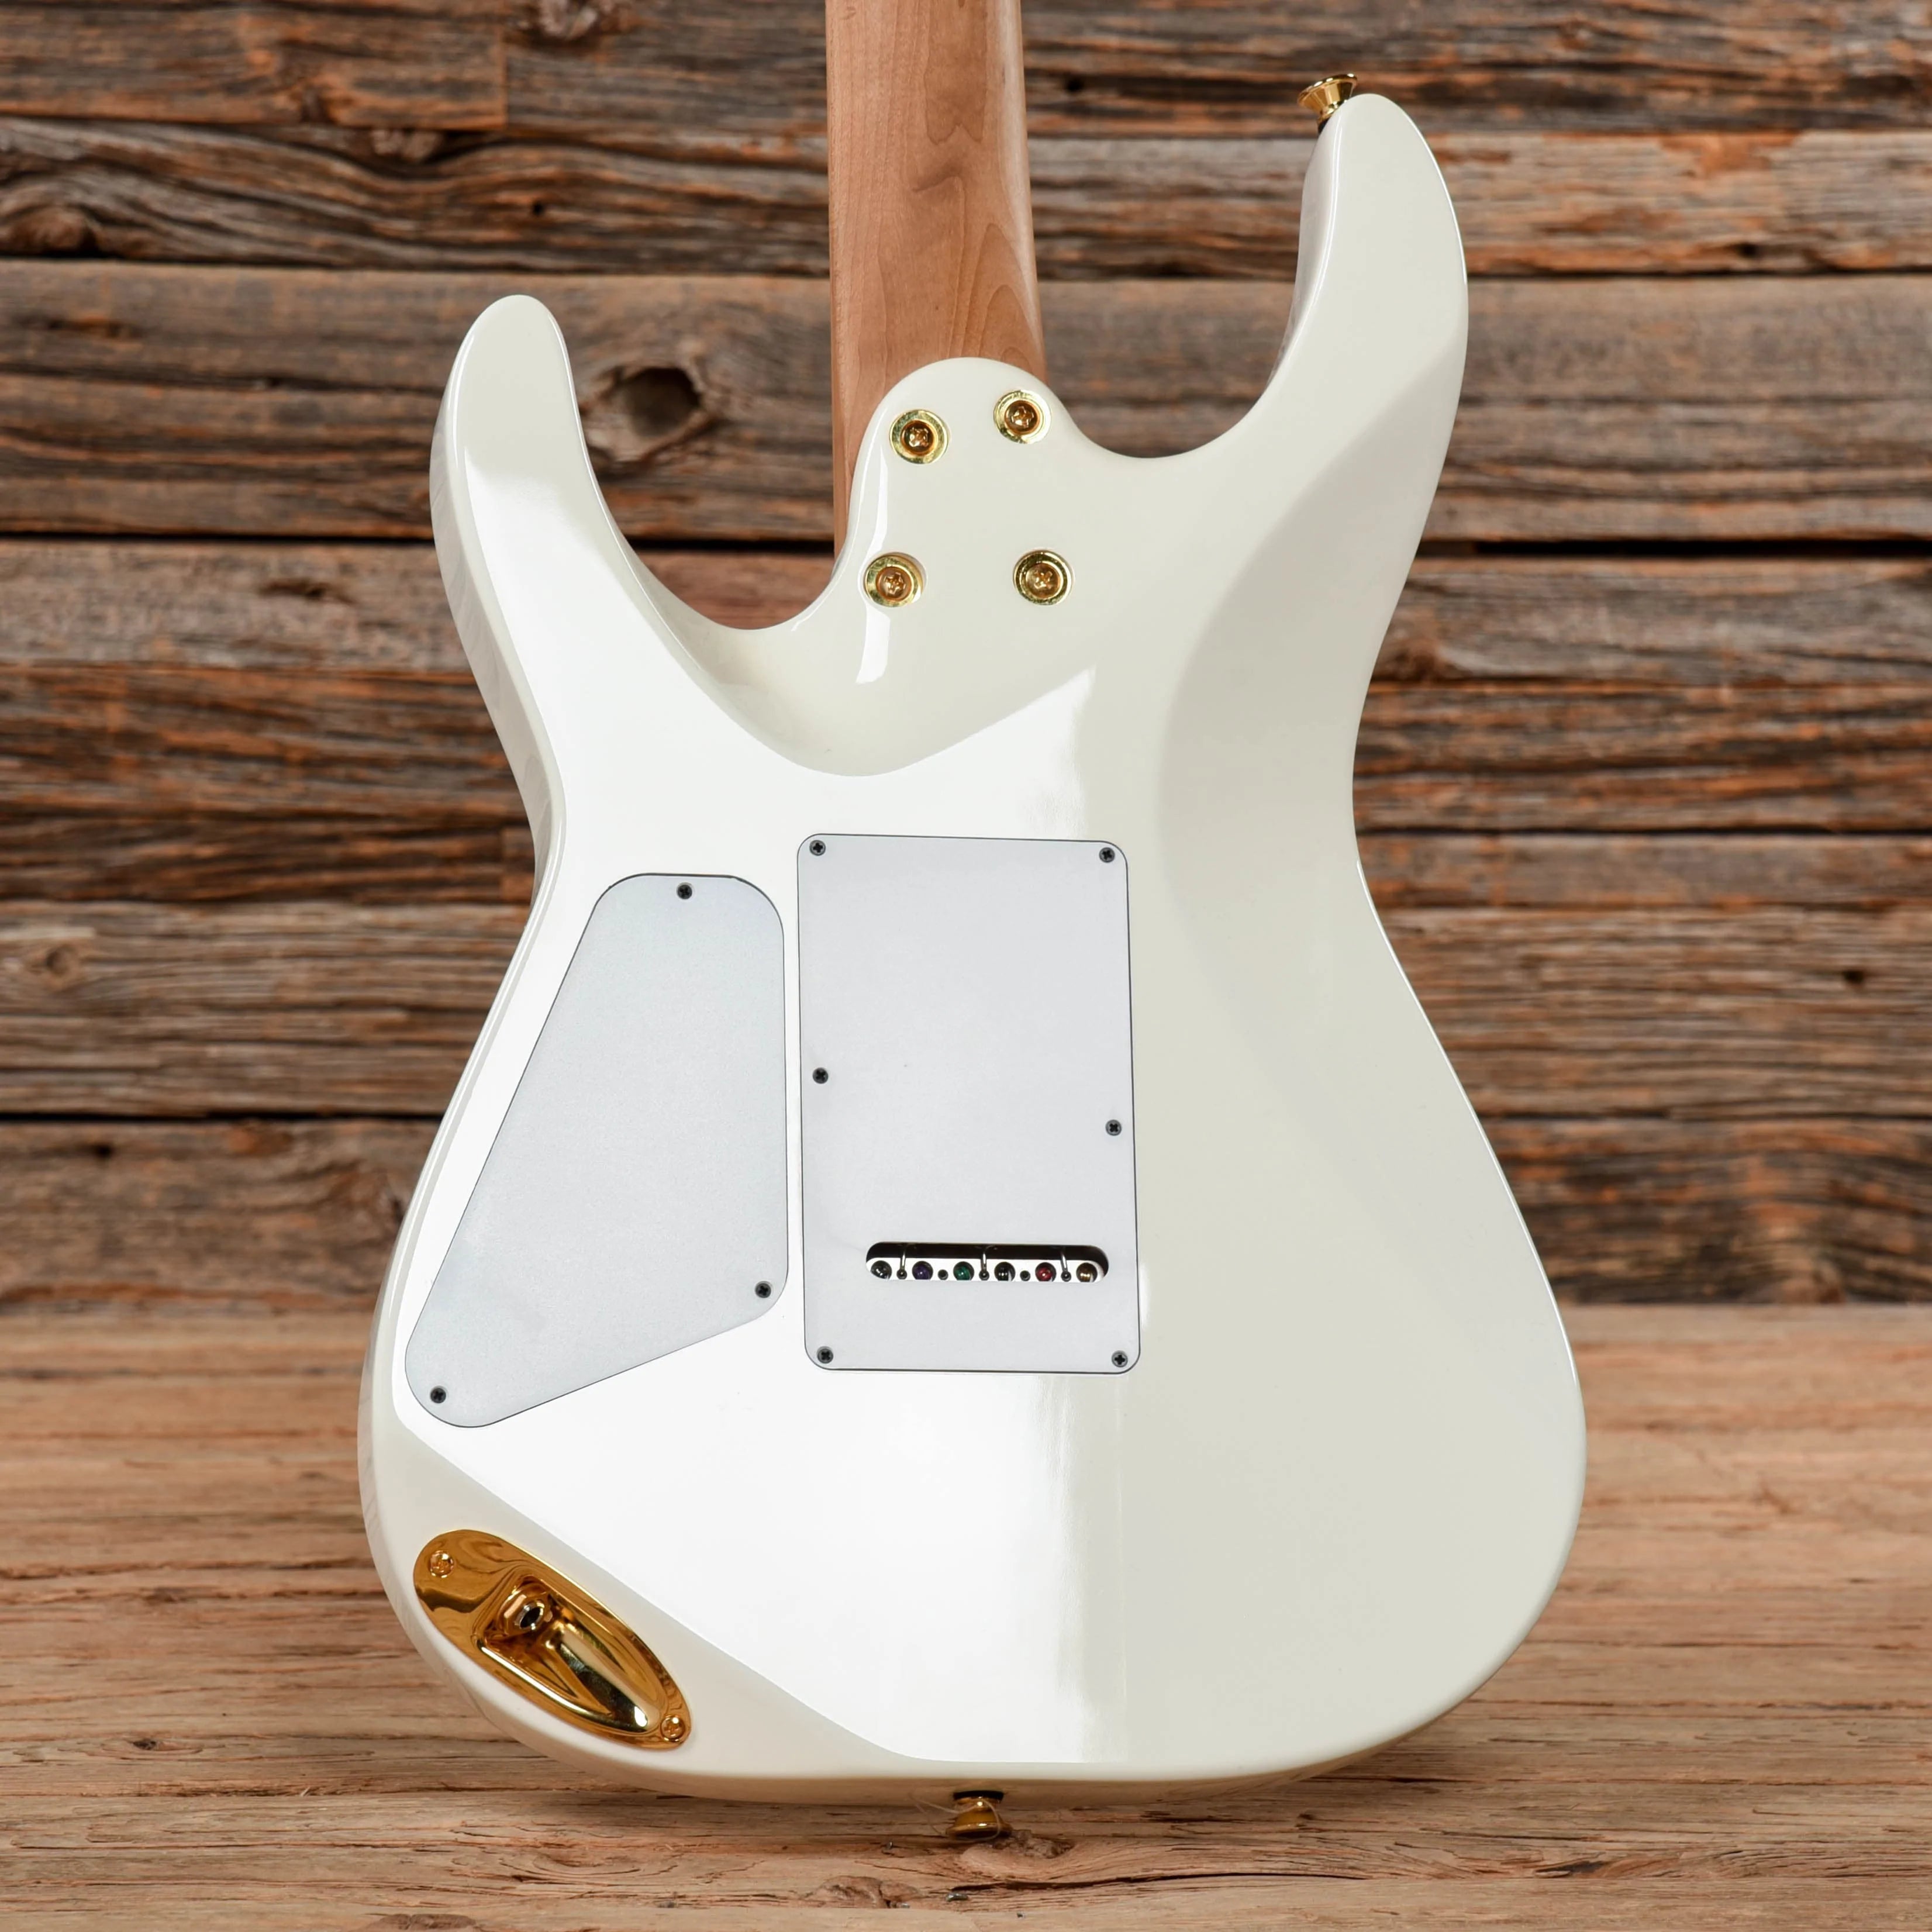 Charvel Pro-Mod DK24 HSS 2PT CM Snow White Electric Guitars / Solid Body